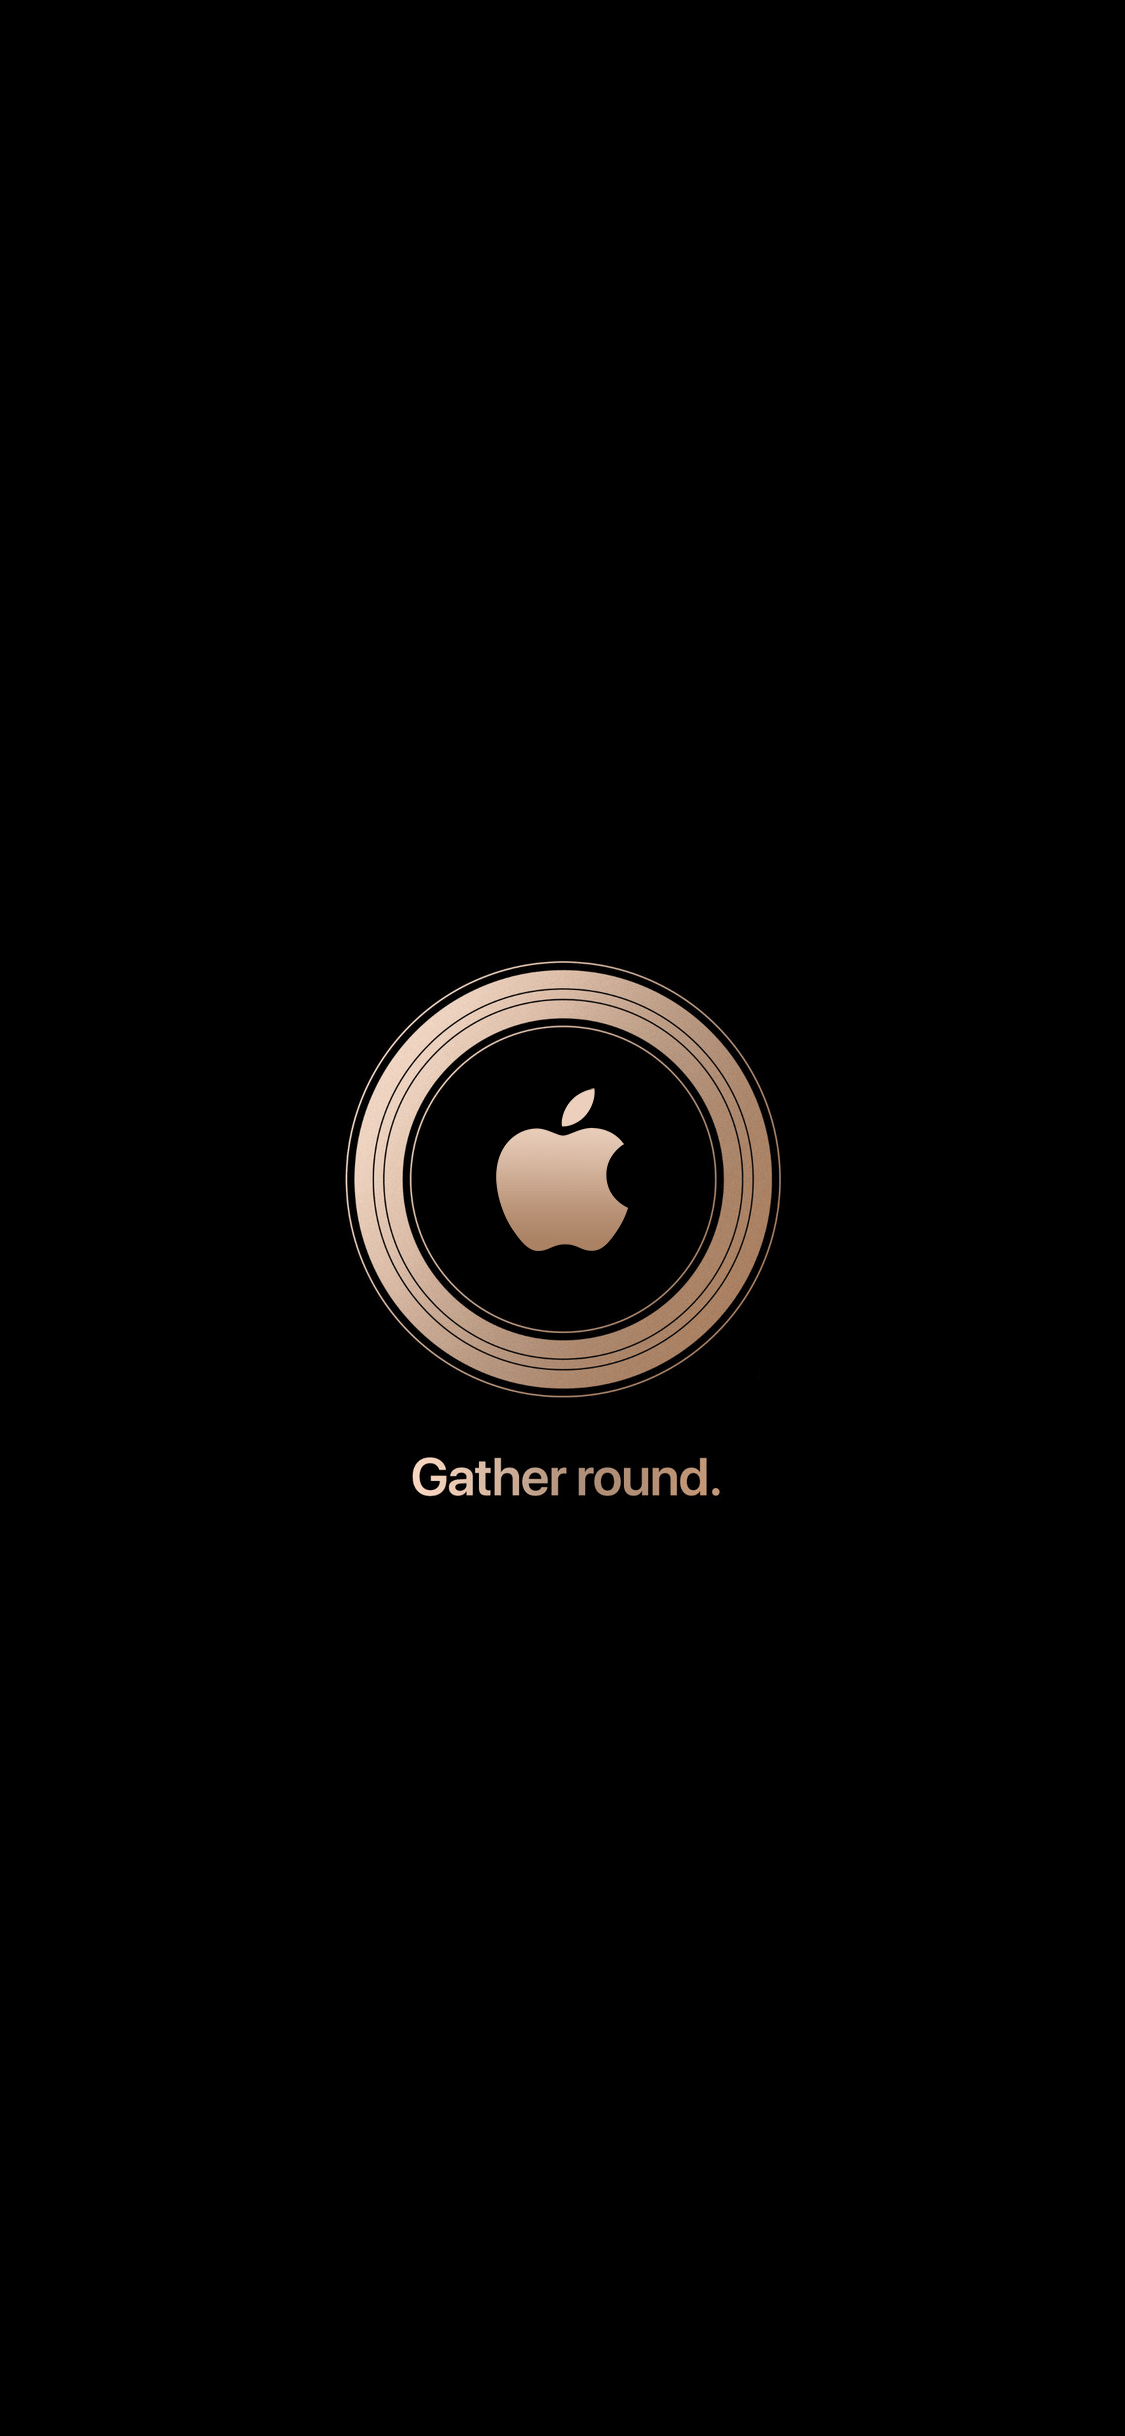 Gather round Apple event wallpaper